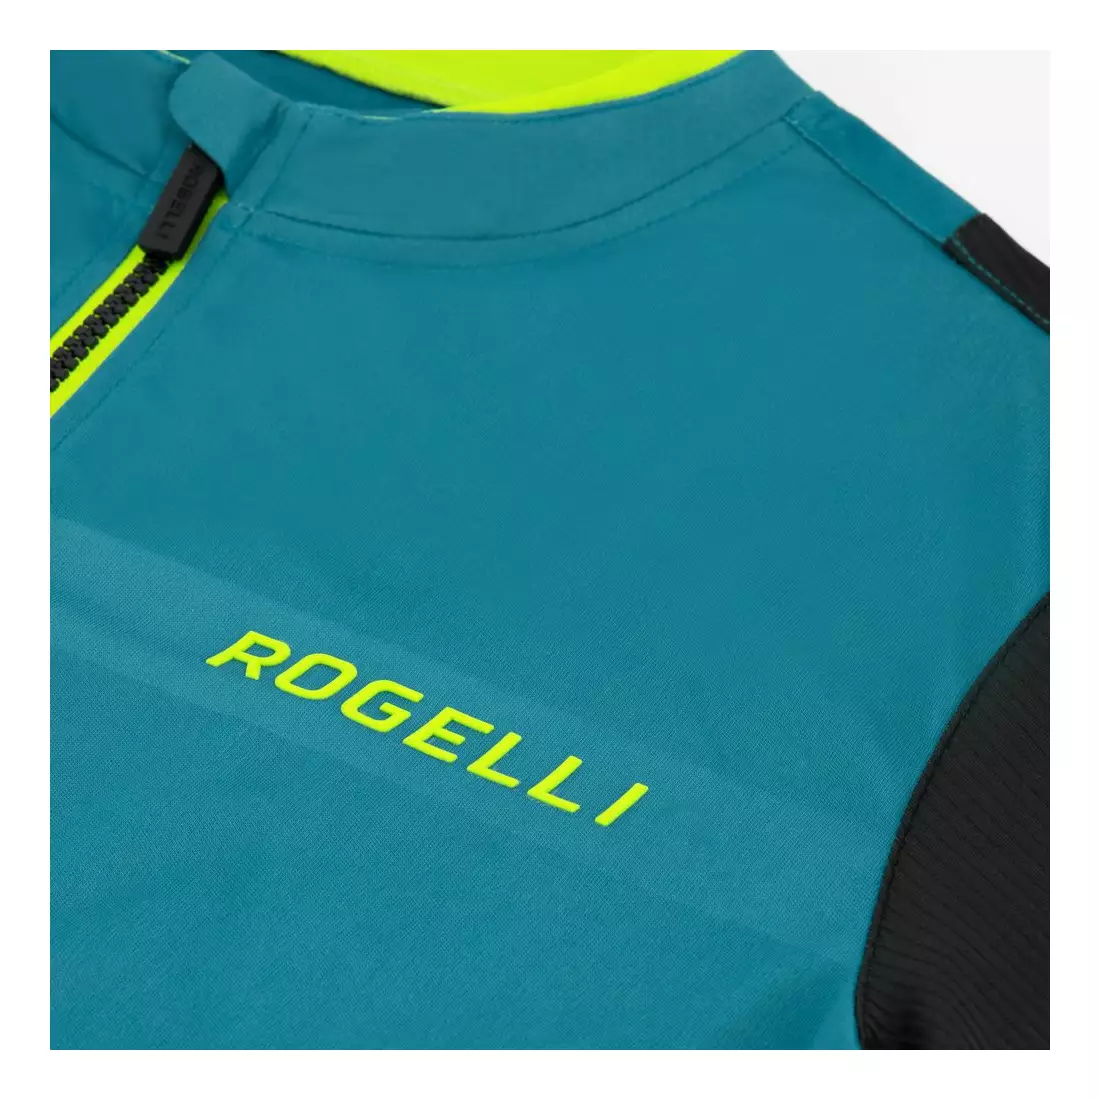 ROGELLI Herren Fahrrad T-Shirt MINIMAL blue/green